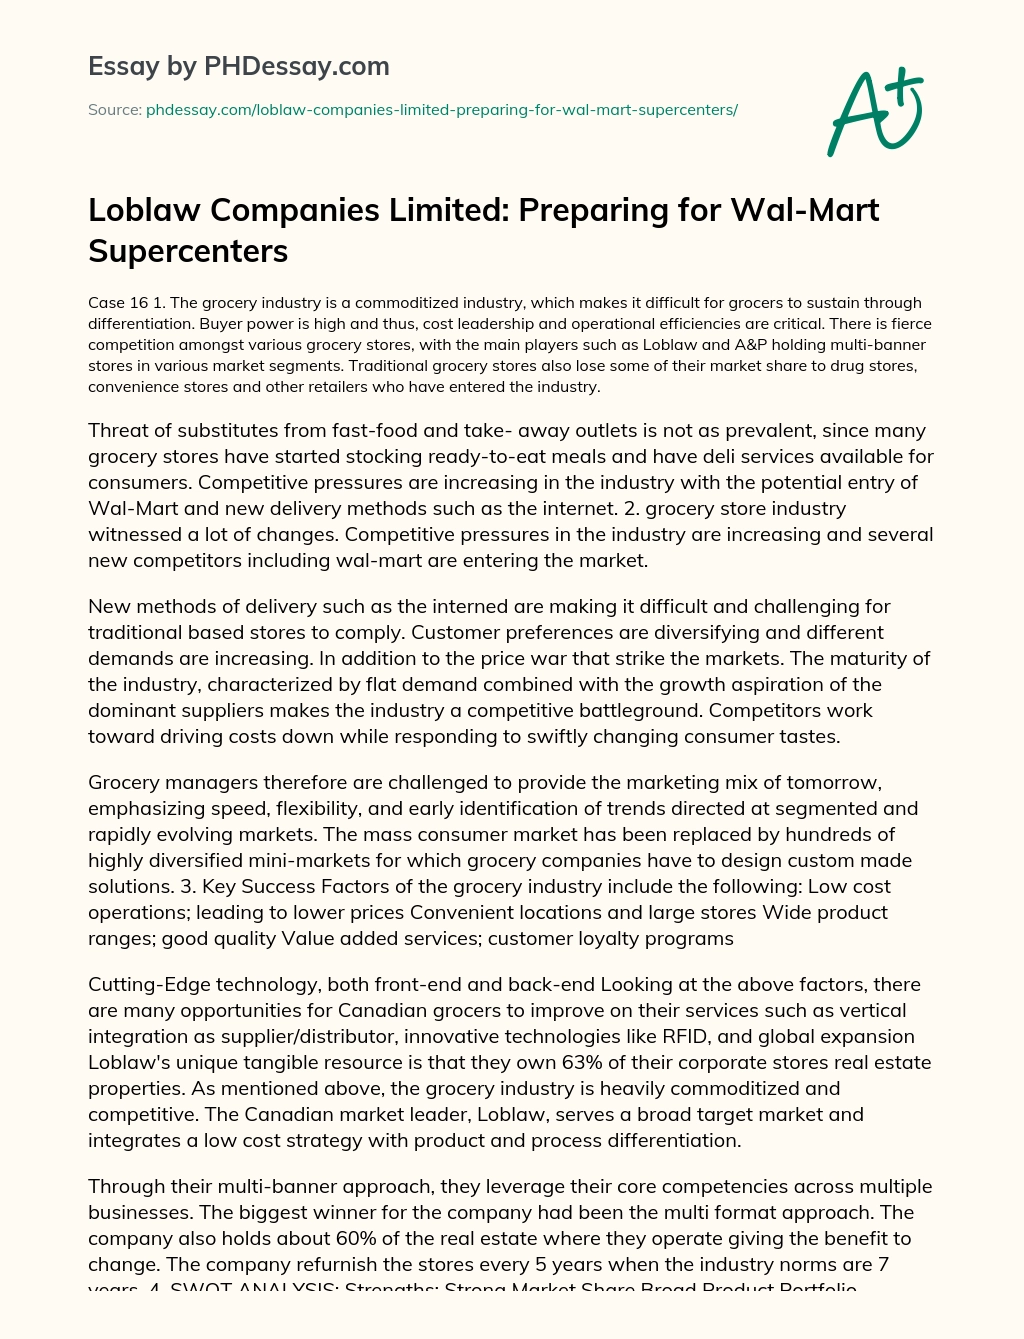 Loblaw Companies Limited: Preparing for Wal-Mart Supercenters essay